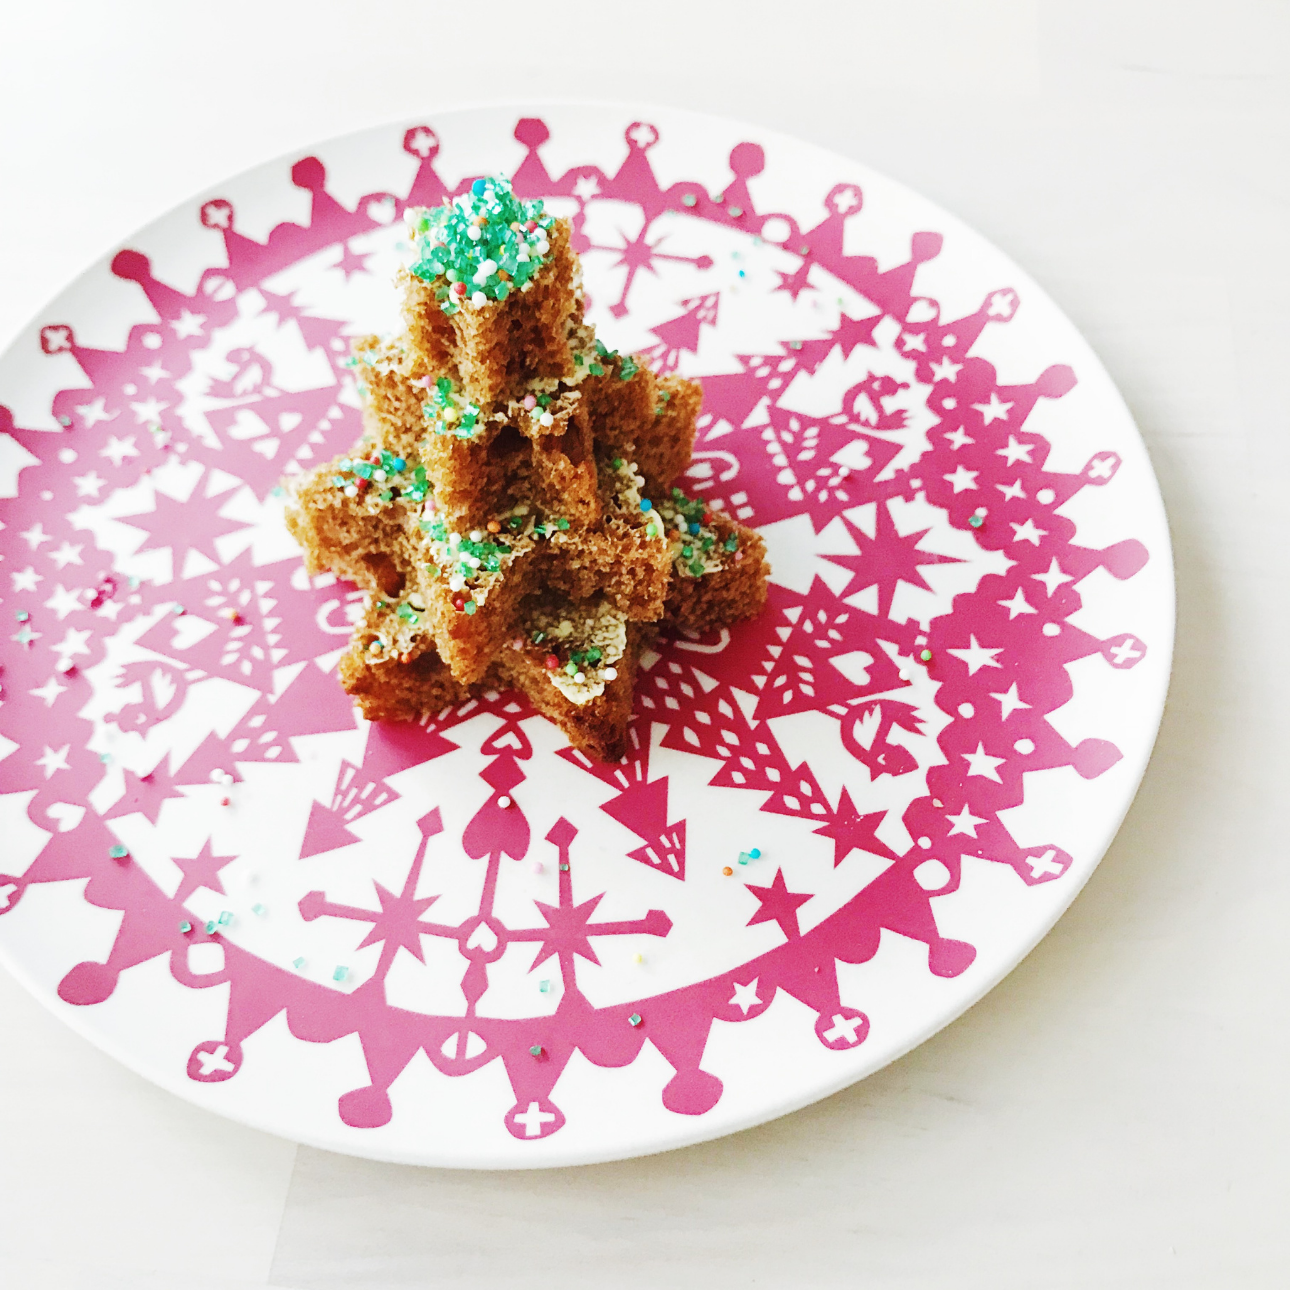 ontbijtkoek kerstboom sterrenvorm sprinkles kerstontbijt